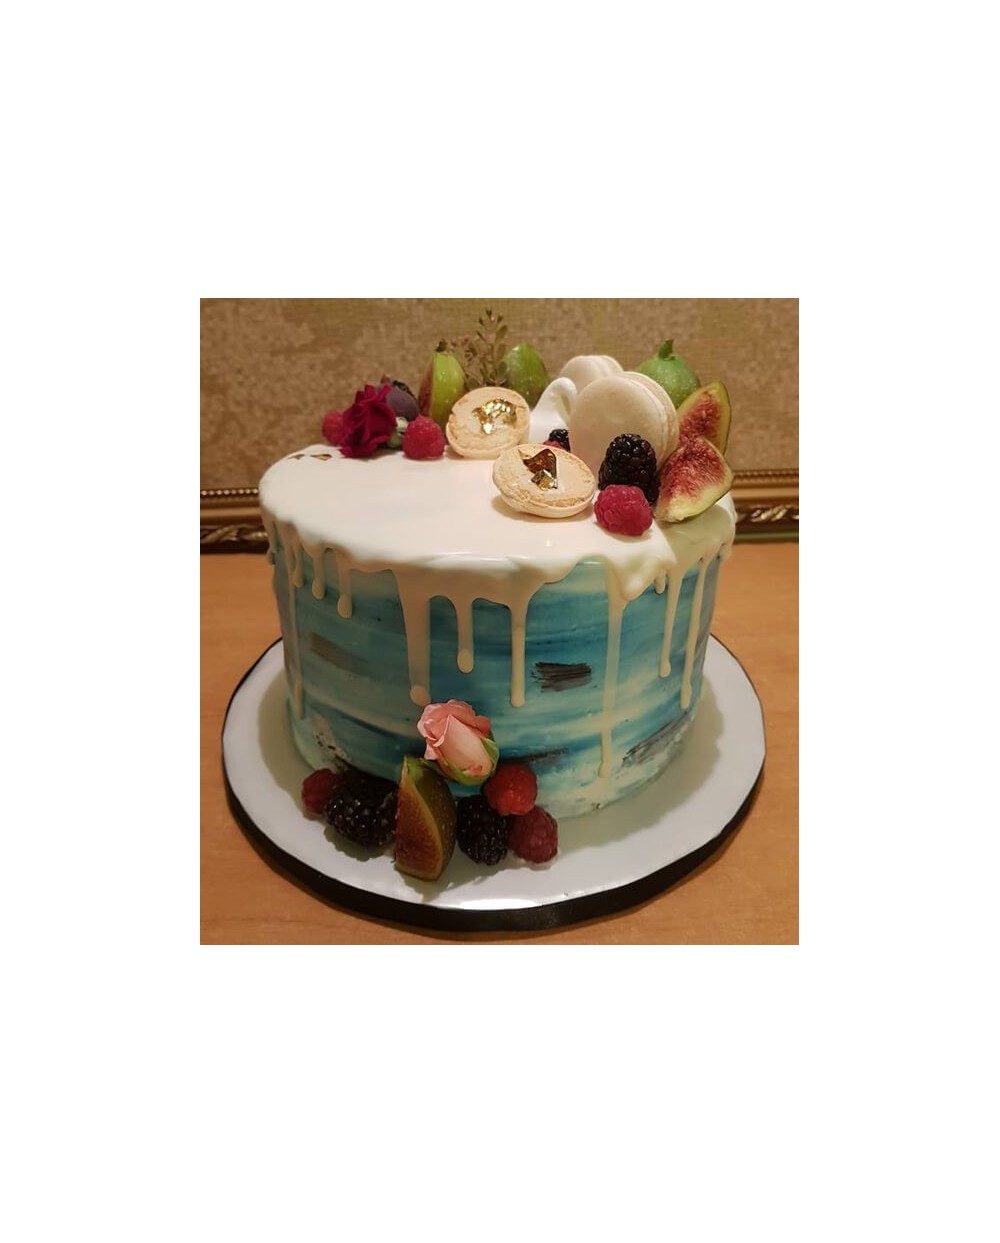 Cake-0275